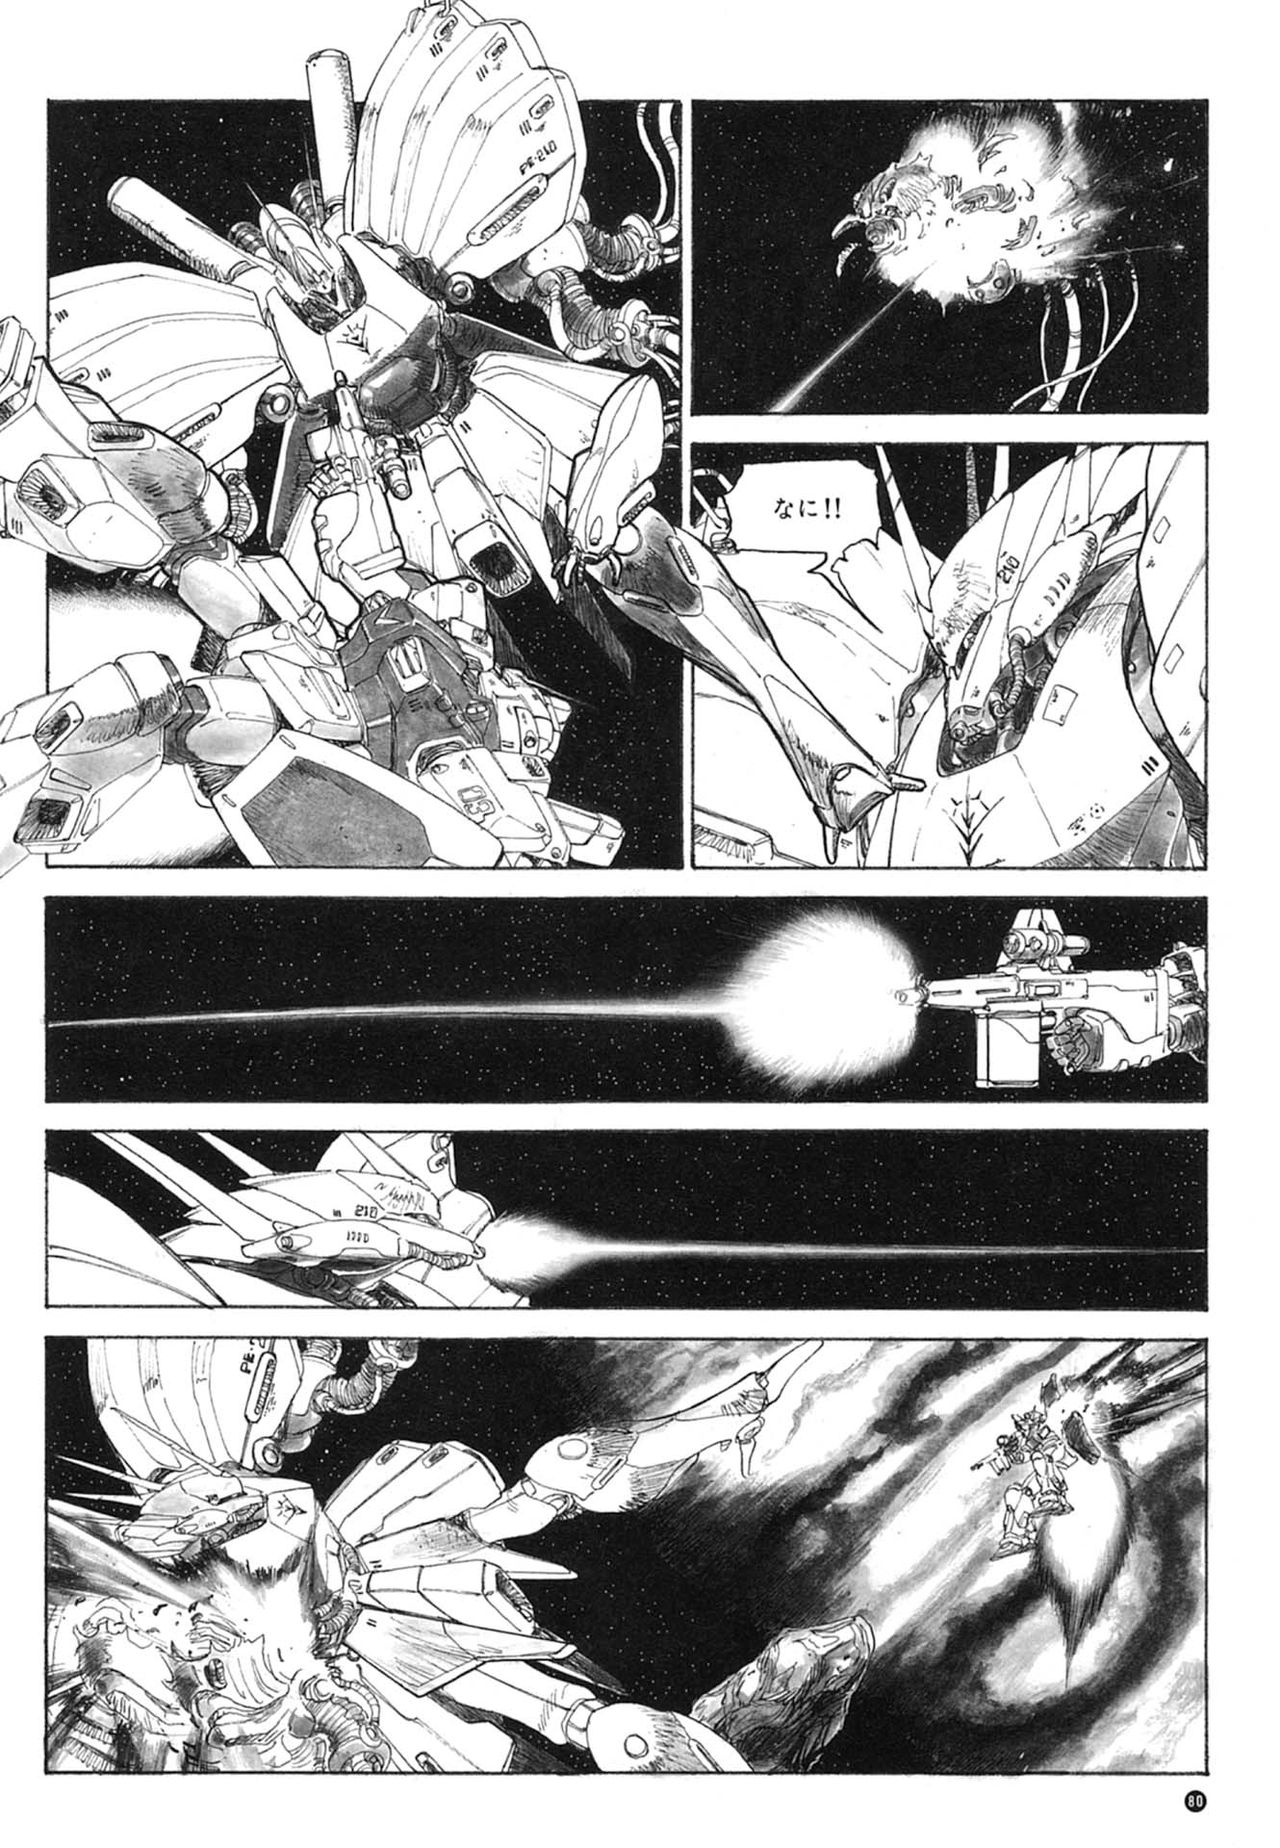 [Kazuhisa Kondo] Kazuhisa Kondo 2D & 3D Works - Go Ahead - From Mobile Suit Gundam to Original Mechanism 79